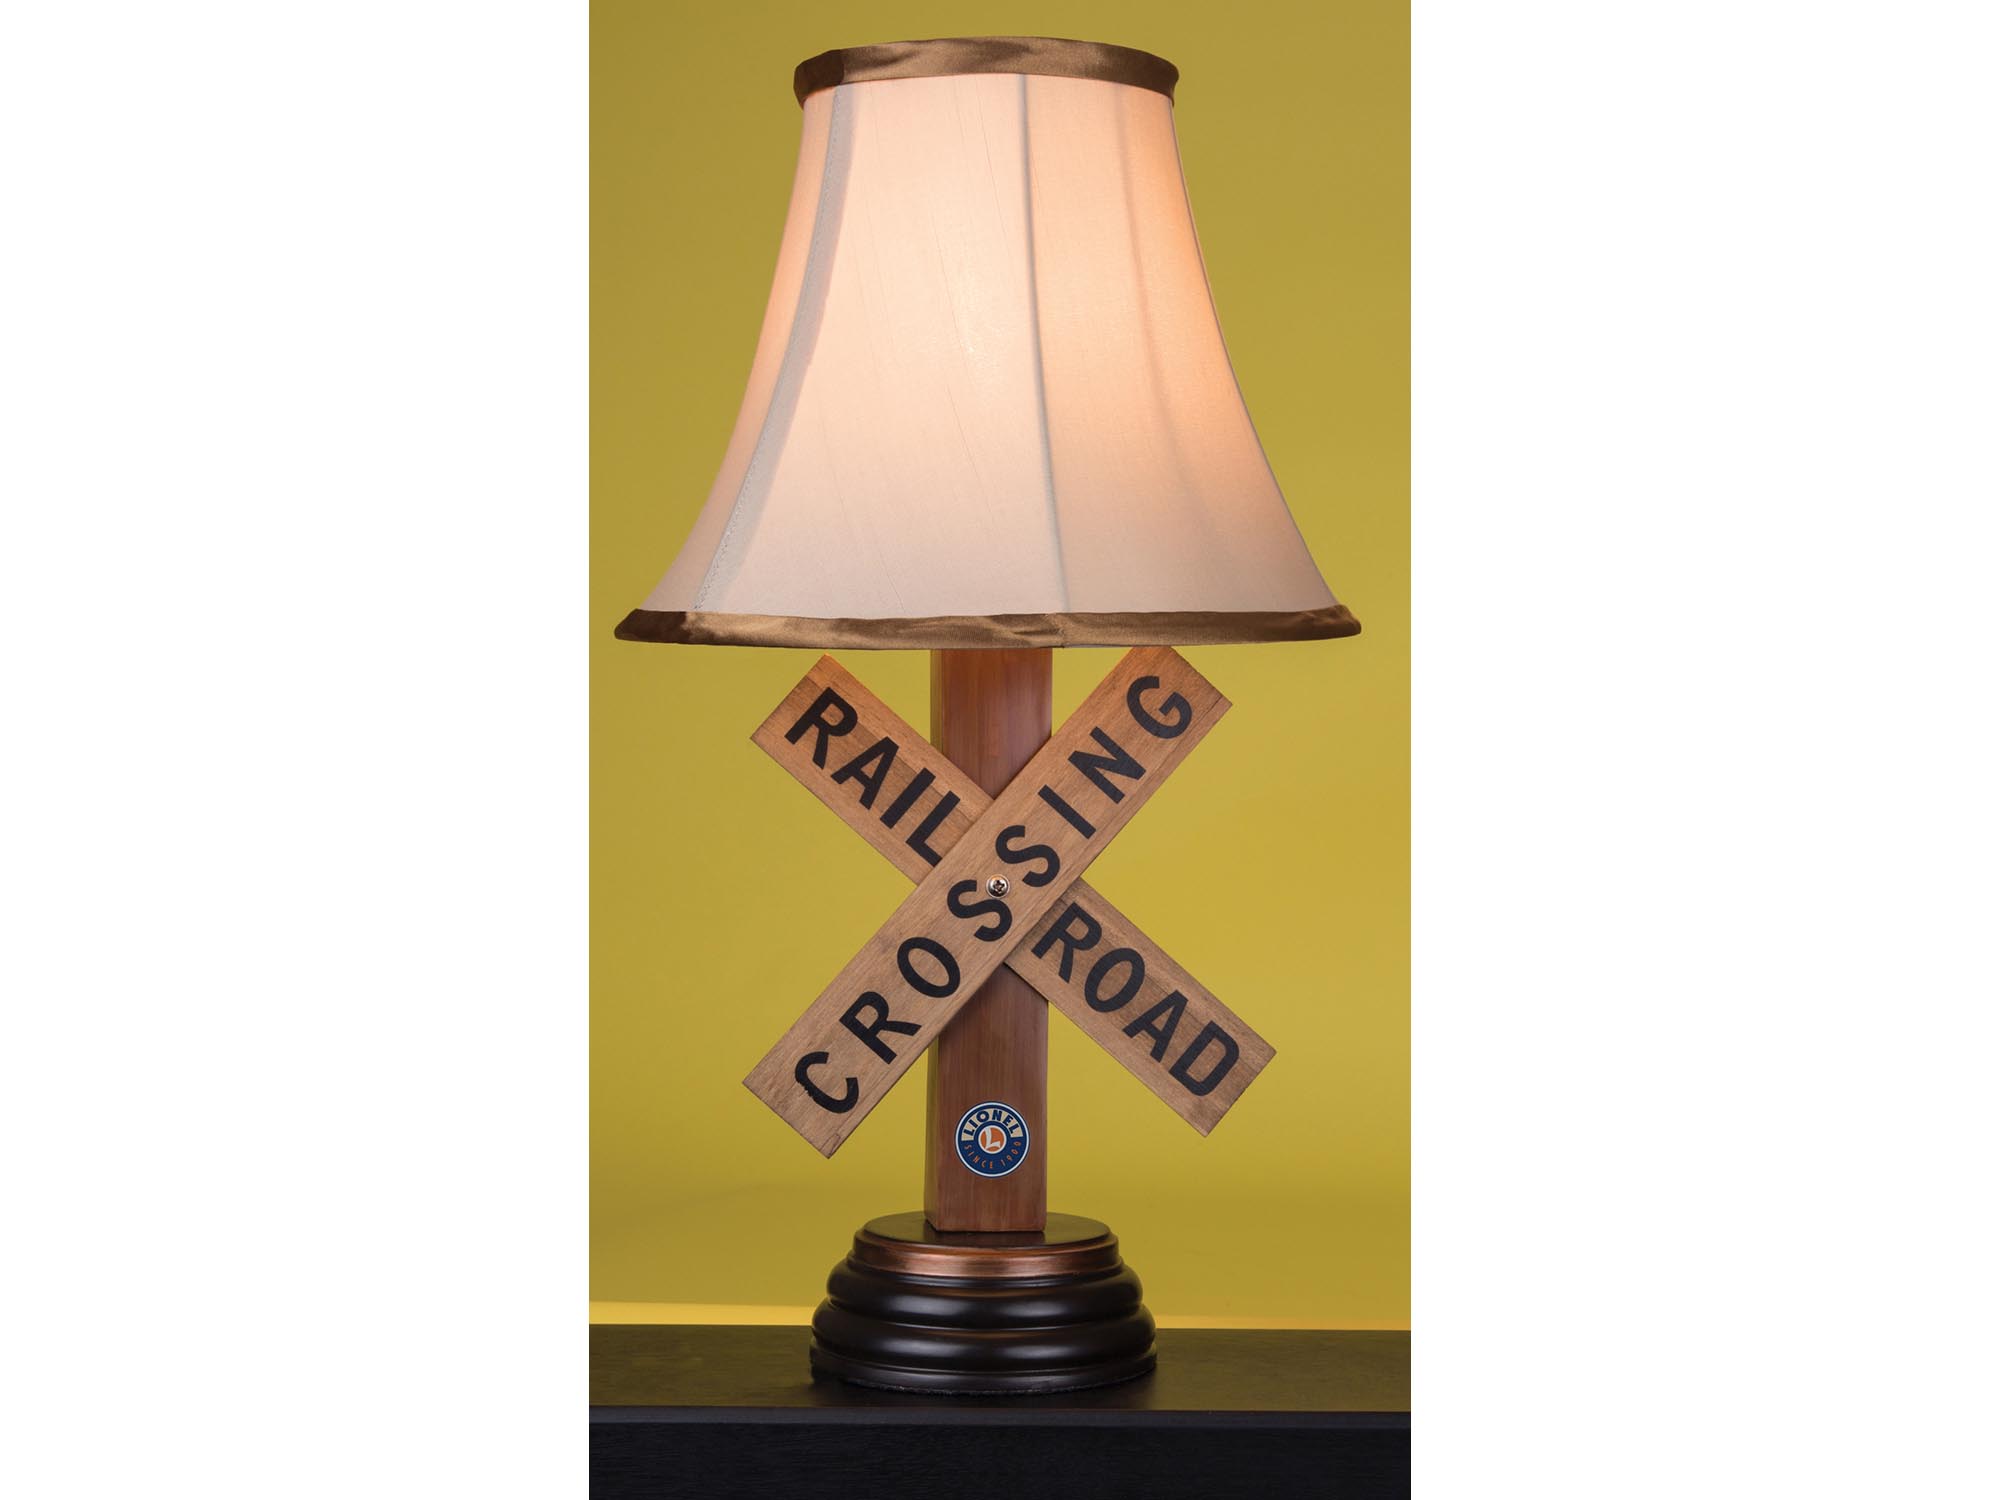 Lionel Railroad Crossing Table Lamp, Lionel Train Table Lamp